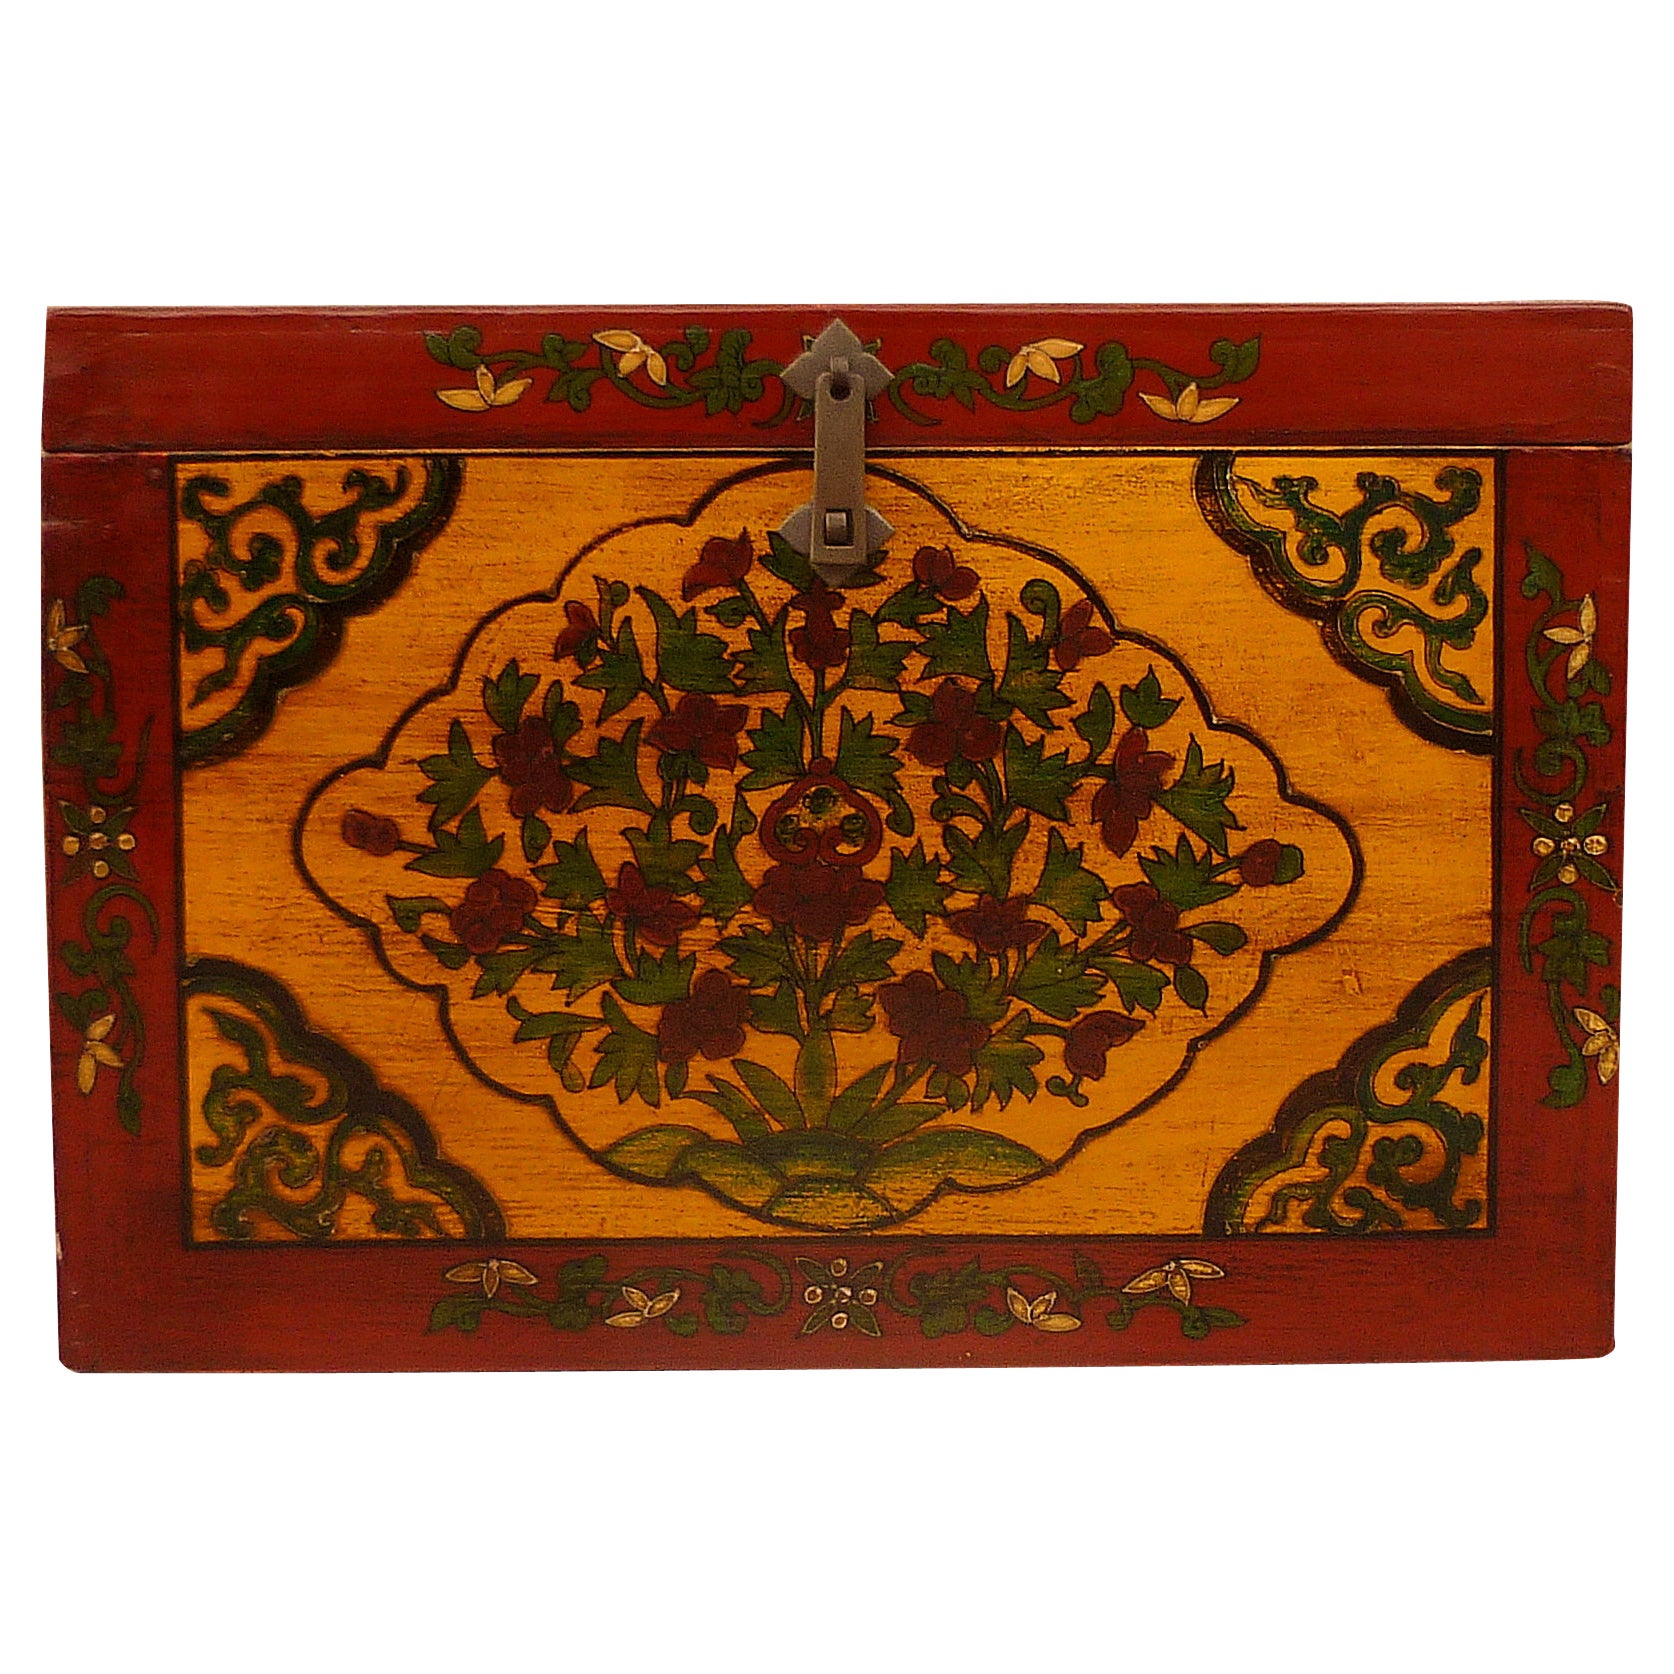 Tibetische große tibetische Schachtel mit handbemaltem polychromem Blumenmotiv